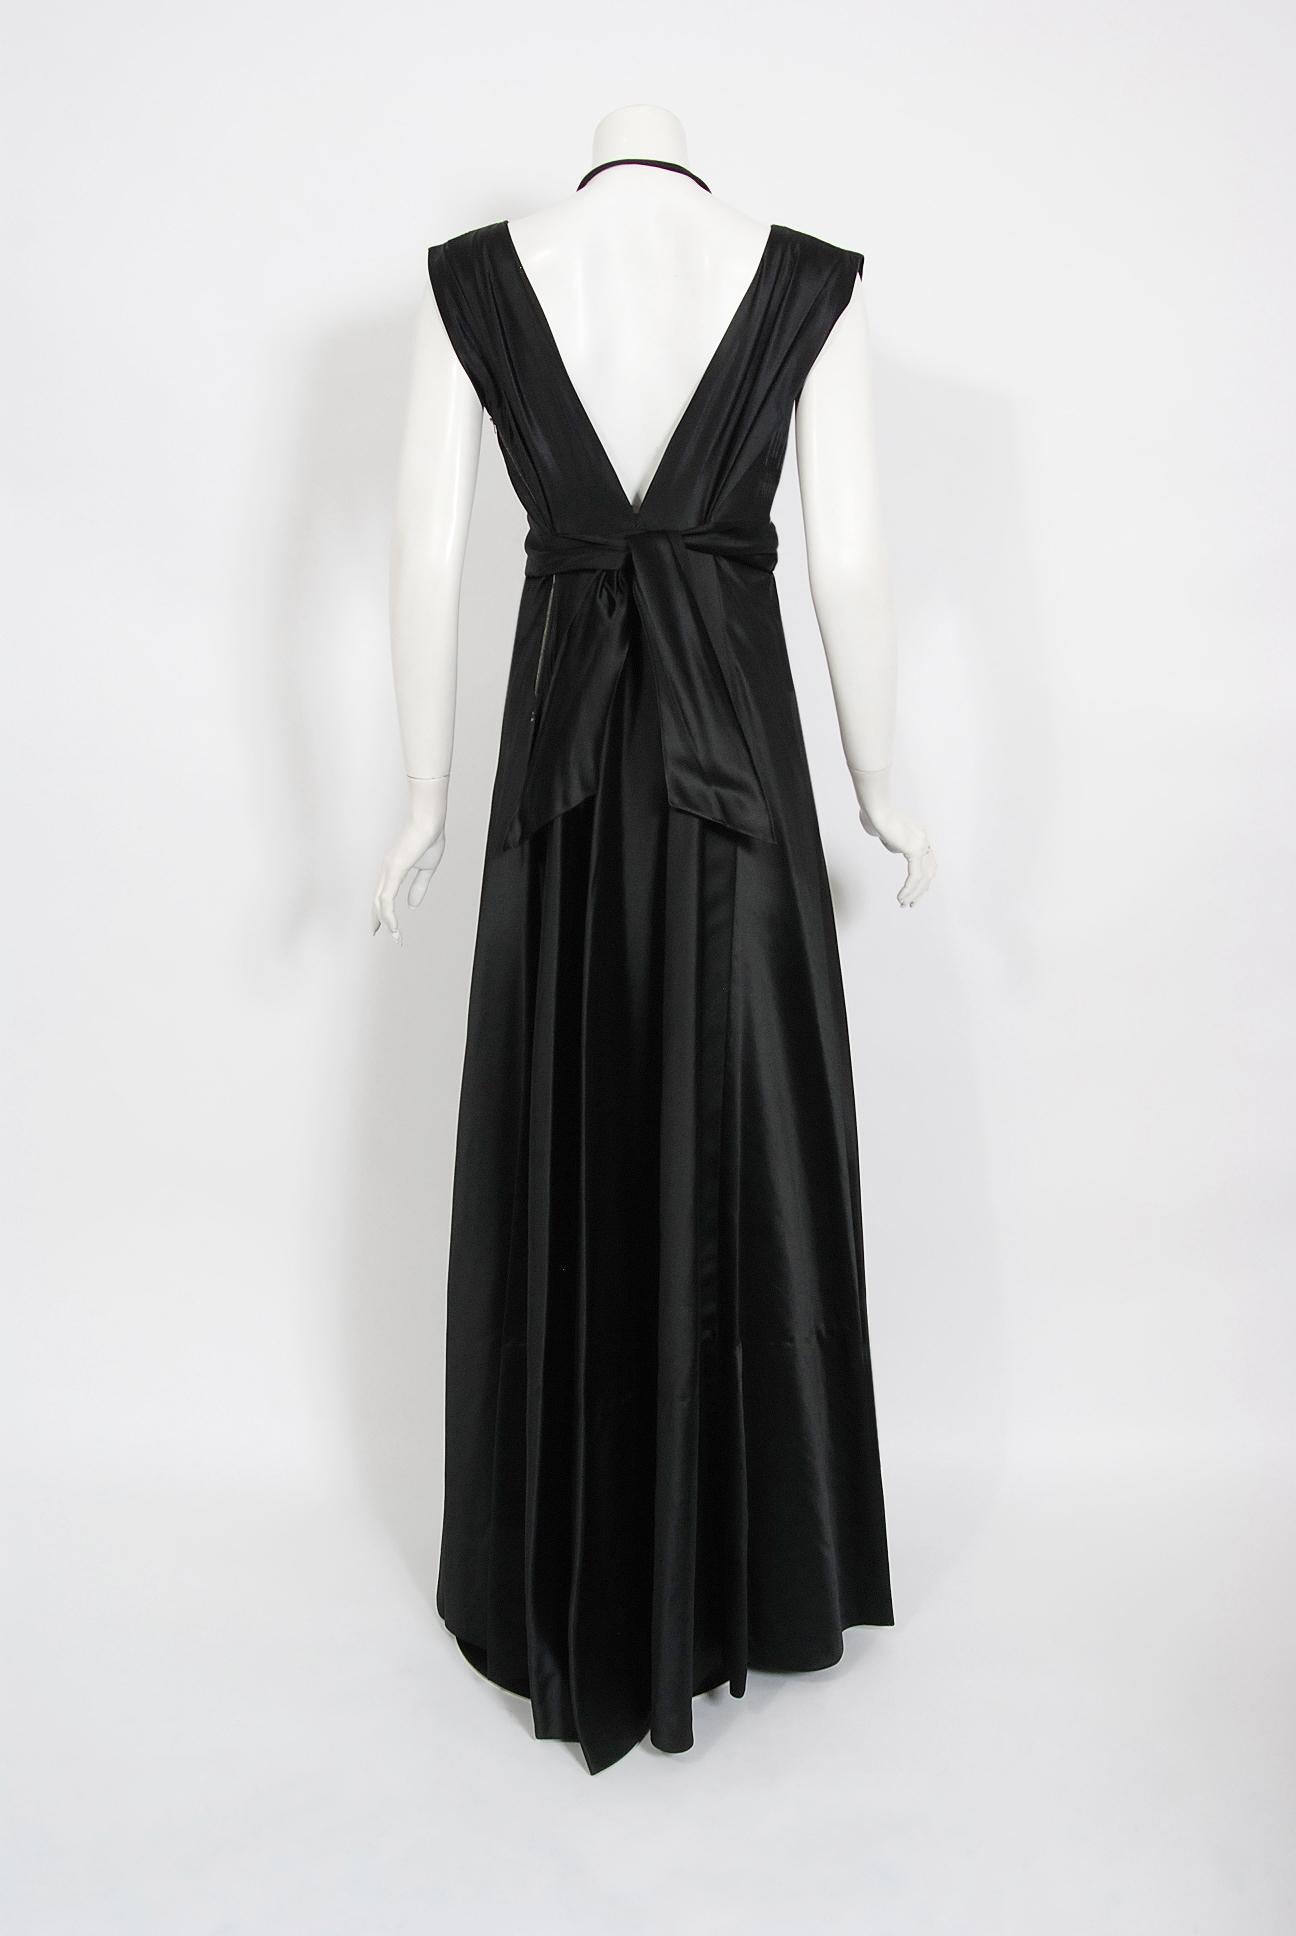 1940s black tie dress